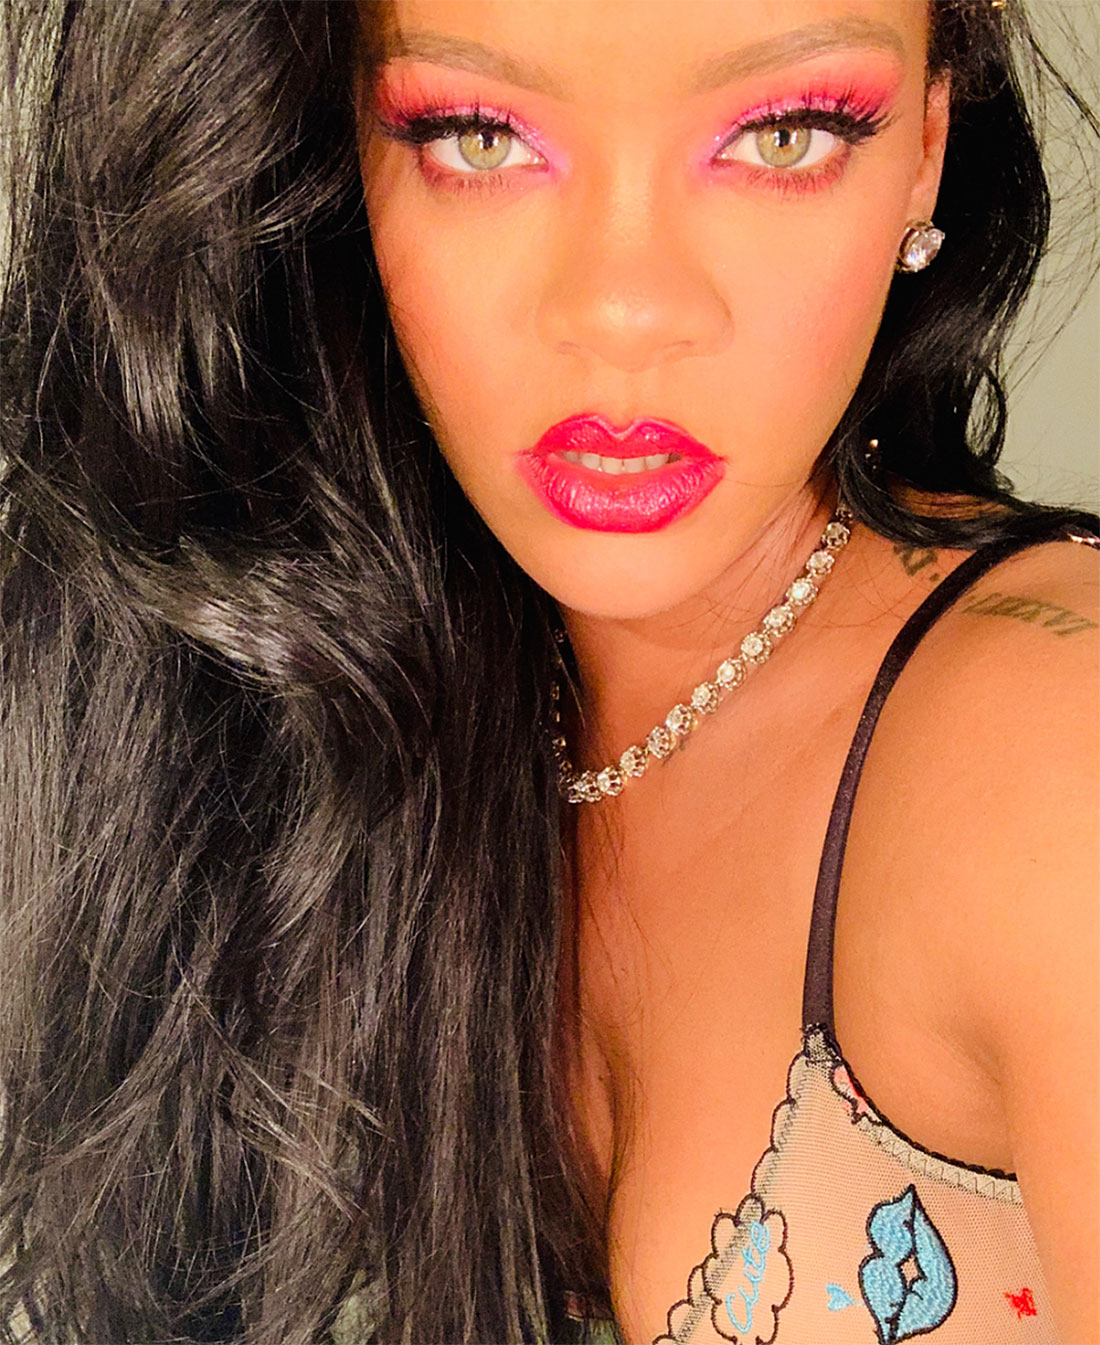 Rihanna Used Fenty Lipstick In New Ways at Savage x Fenty Spring 2019